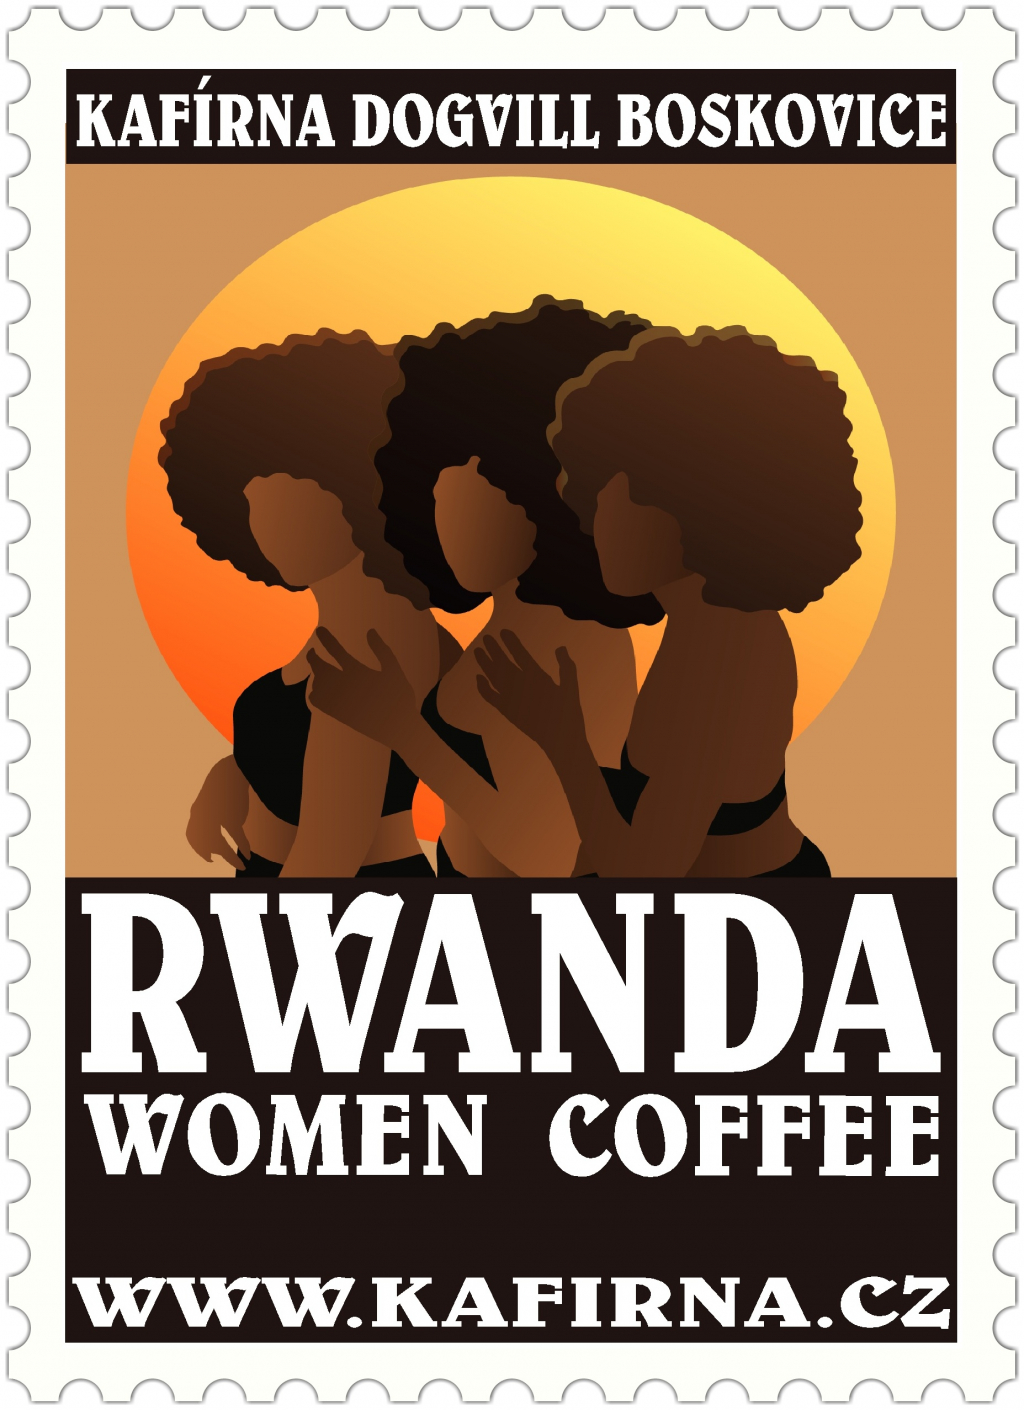 RWANDA Women Coffee